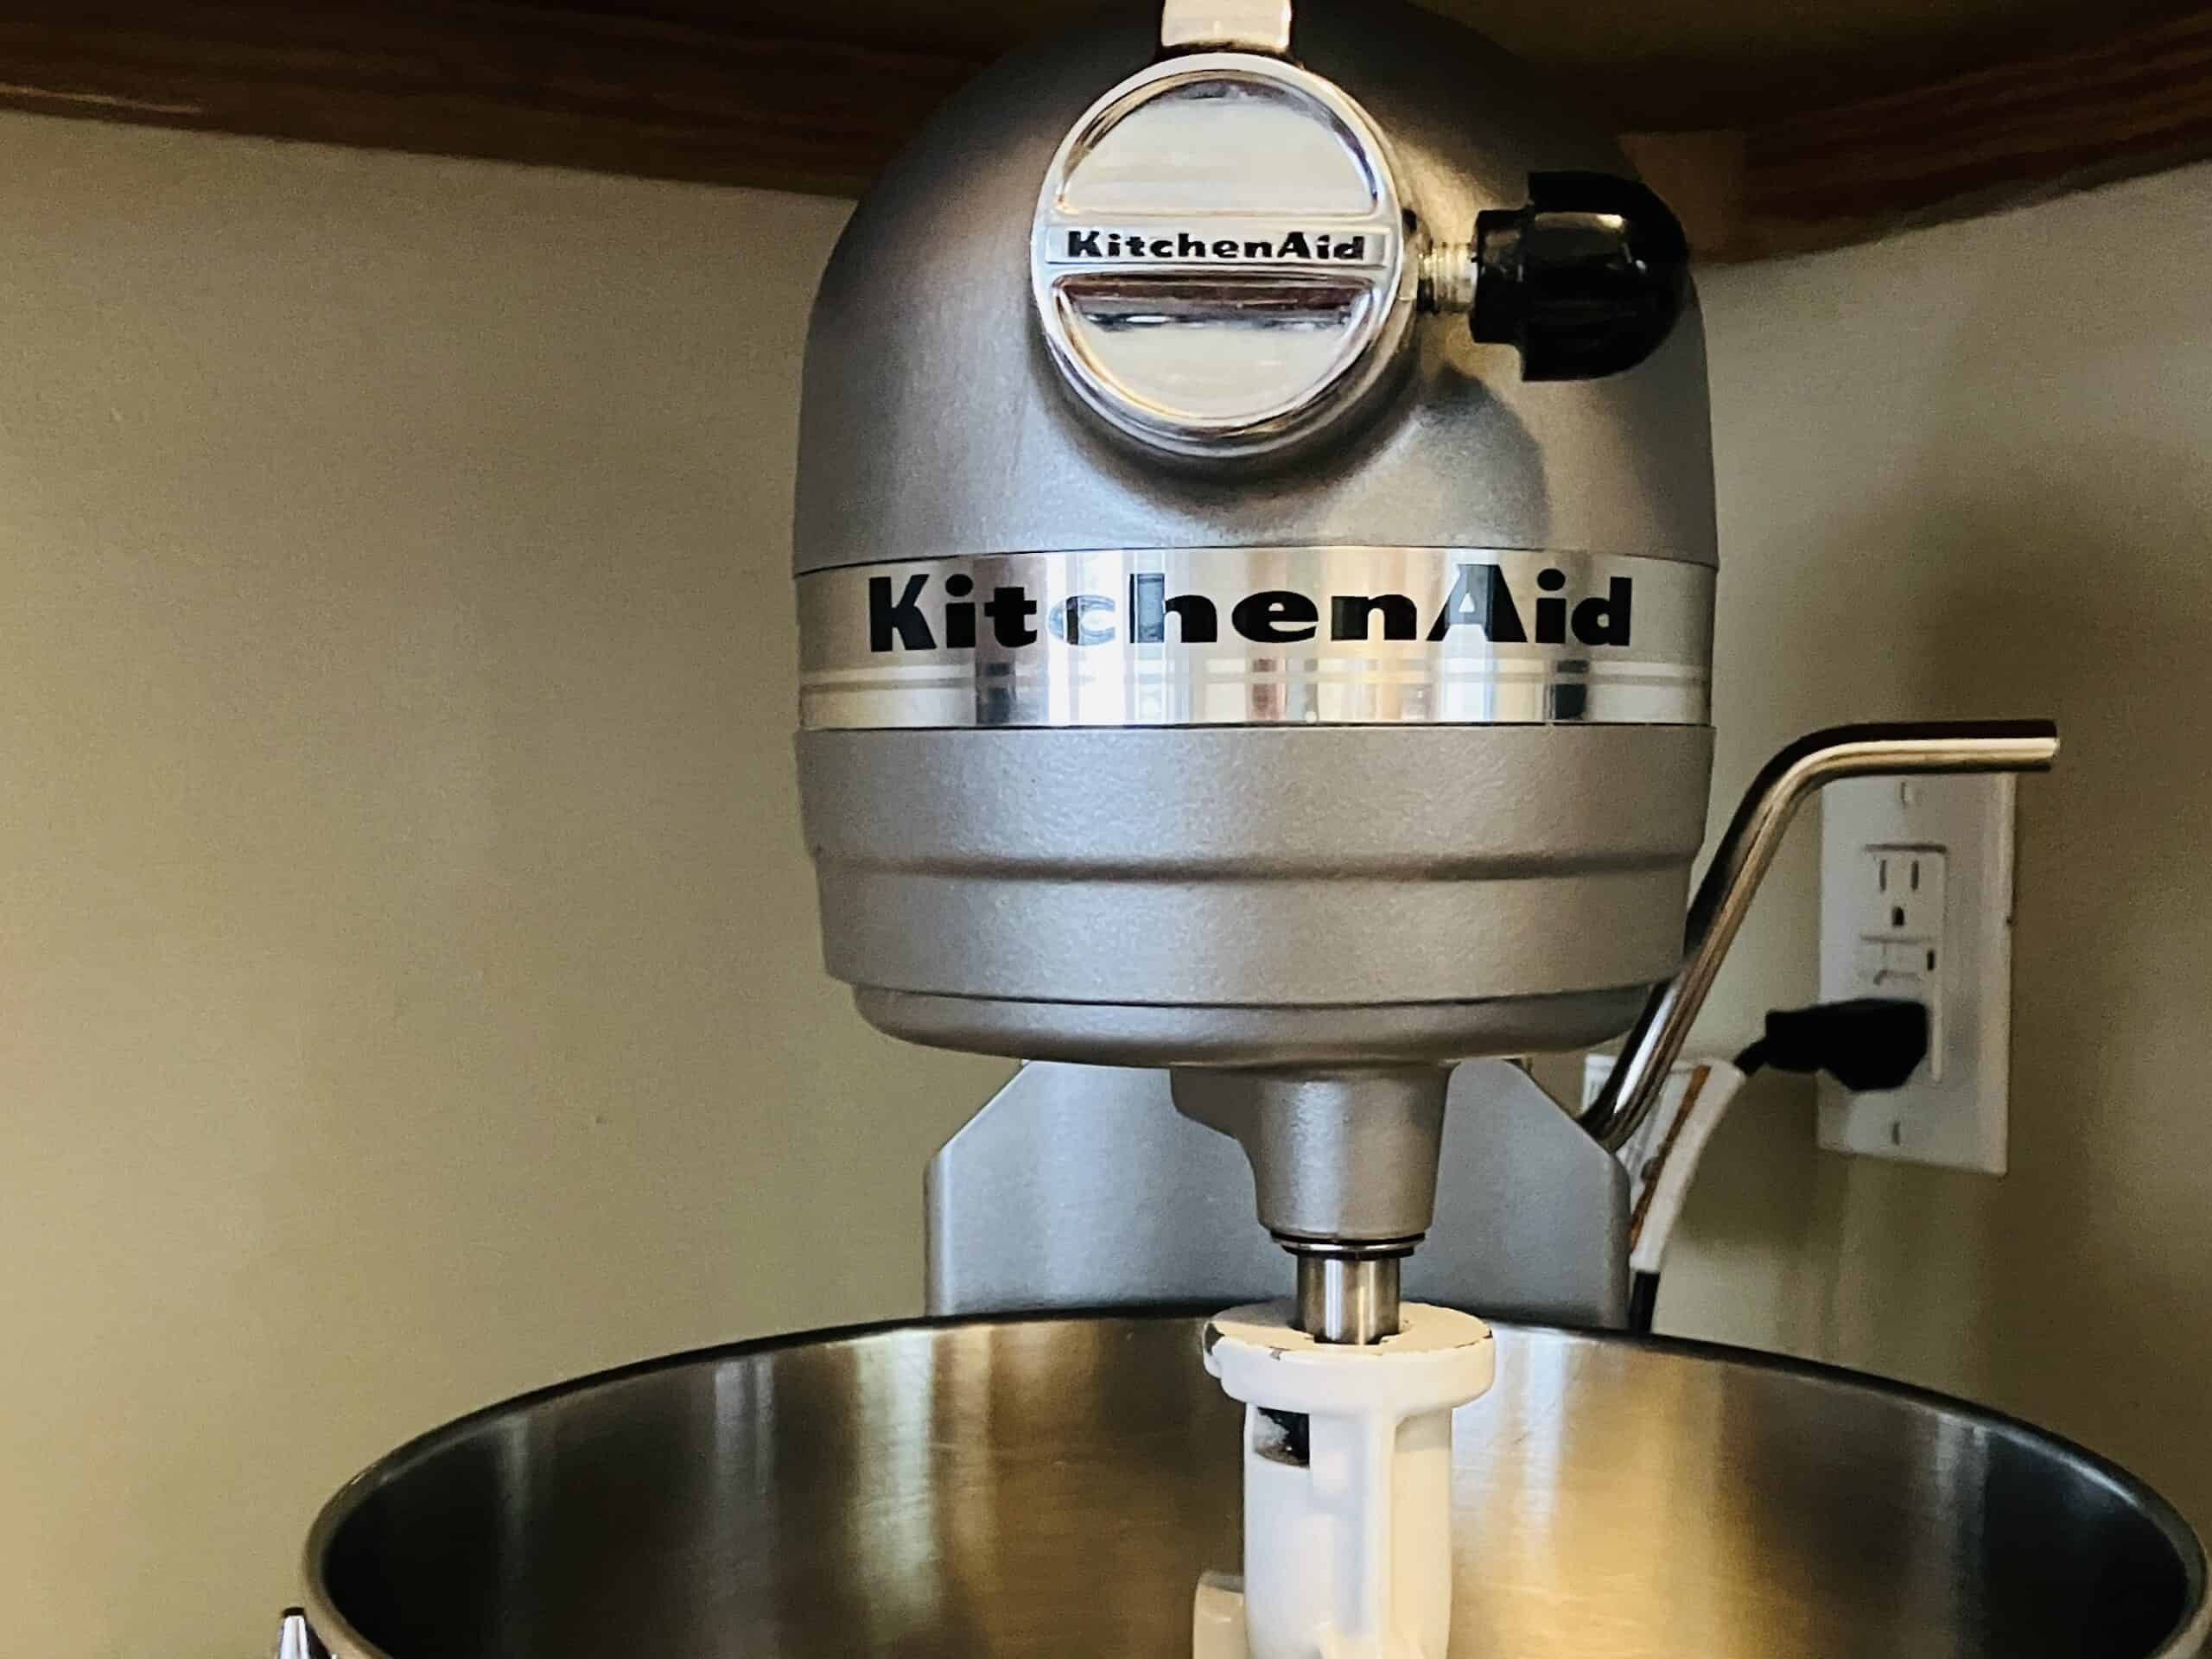 KitchenAid stand mixer